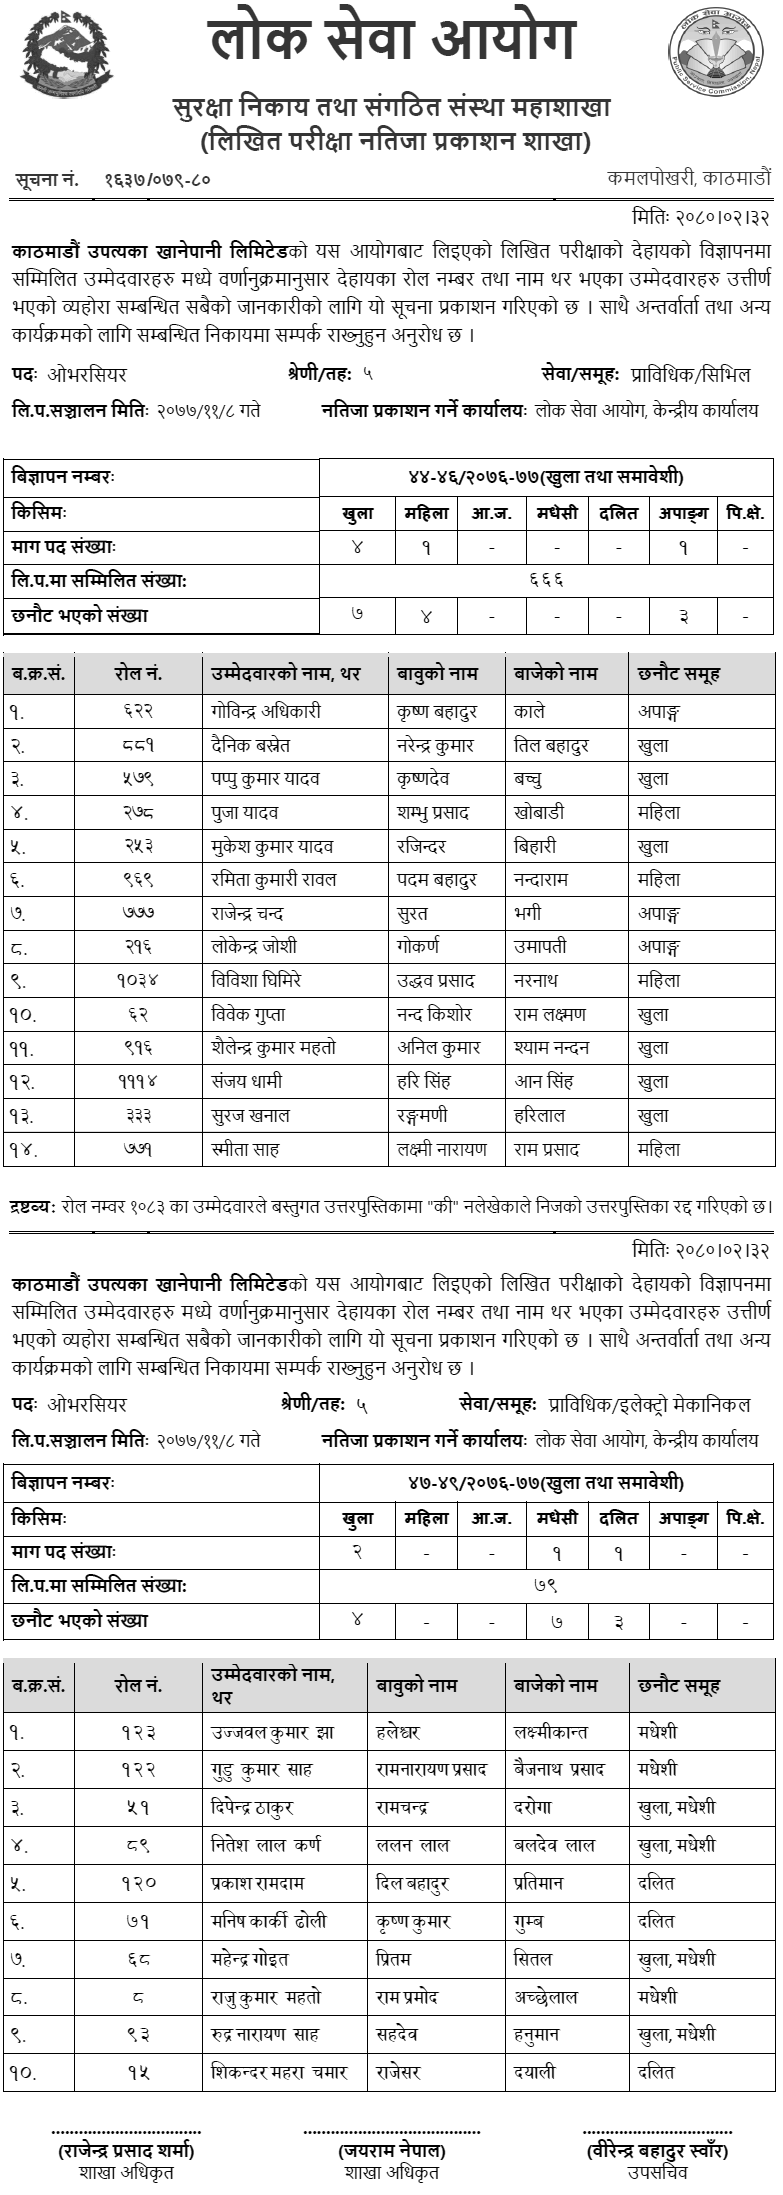 Kathmandu Upatyaka Khanepani Ltd KUKL Written Exam Result of Sub Overseer 2080